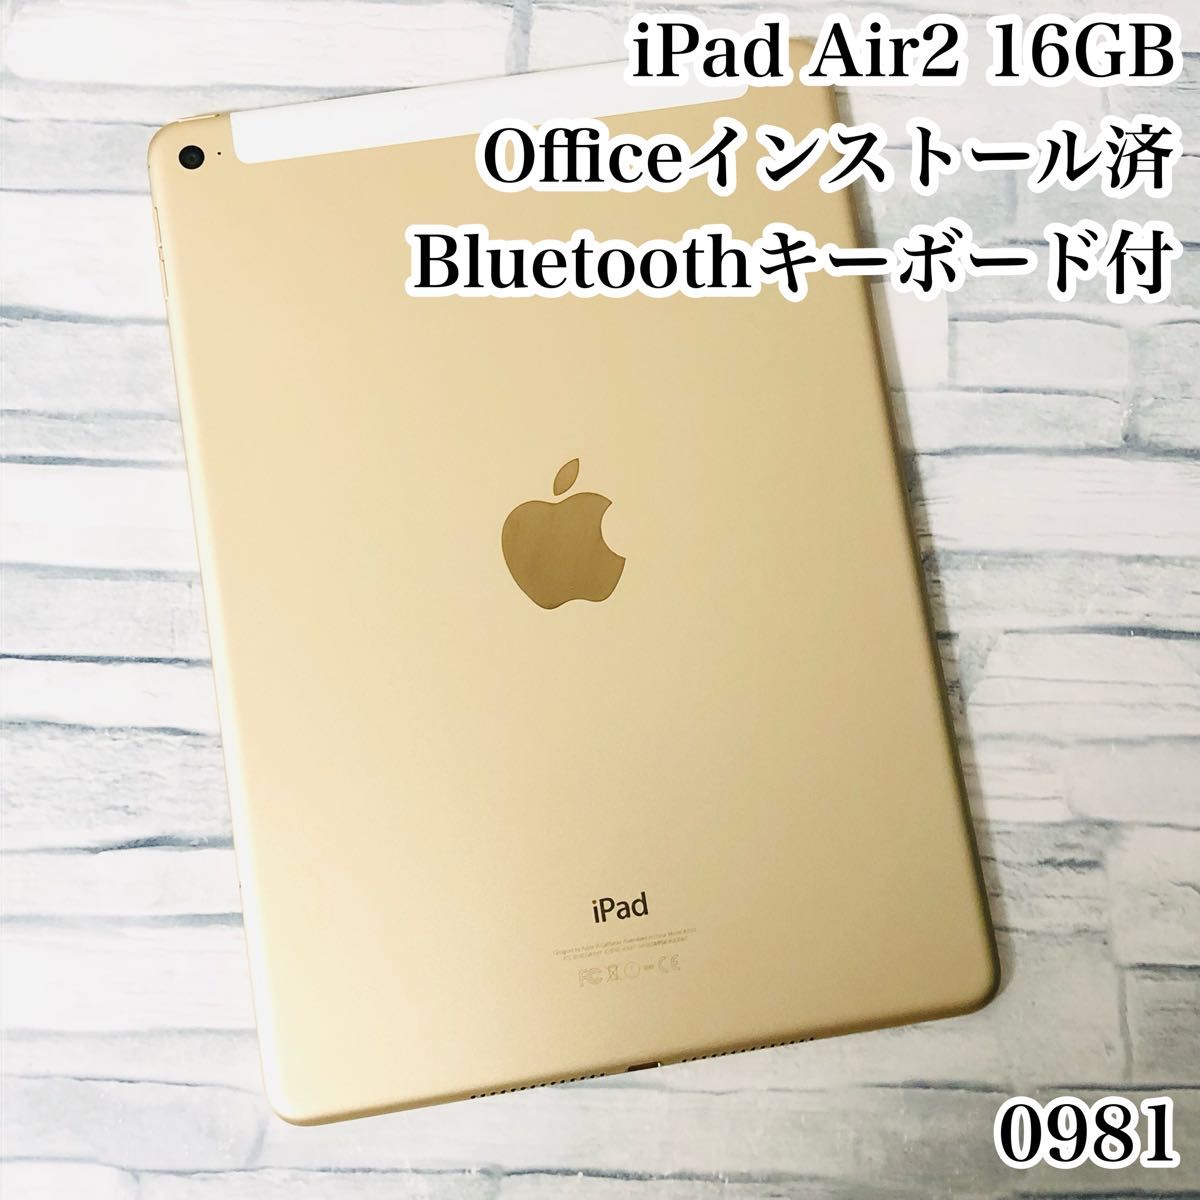 iPad Air2 16GB wifi+セルラーモデル 管理番号 0981｜PayPayフリマ